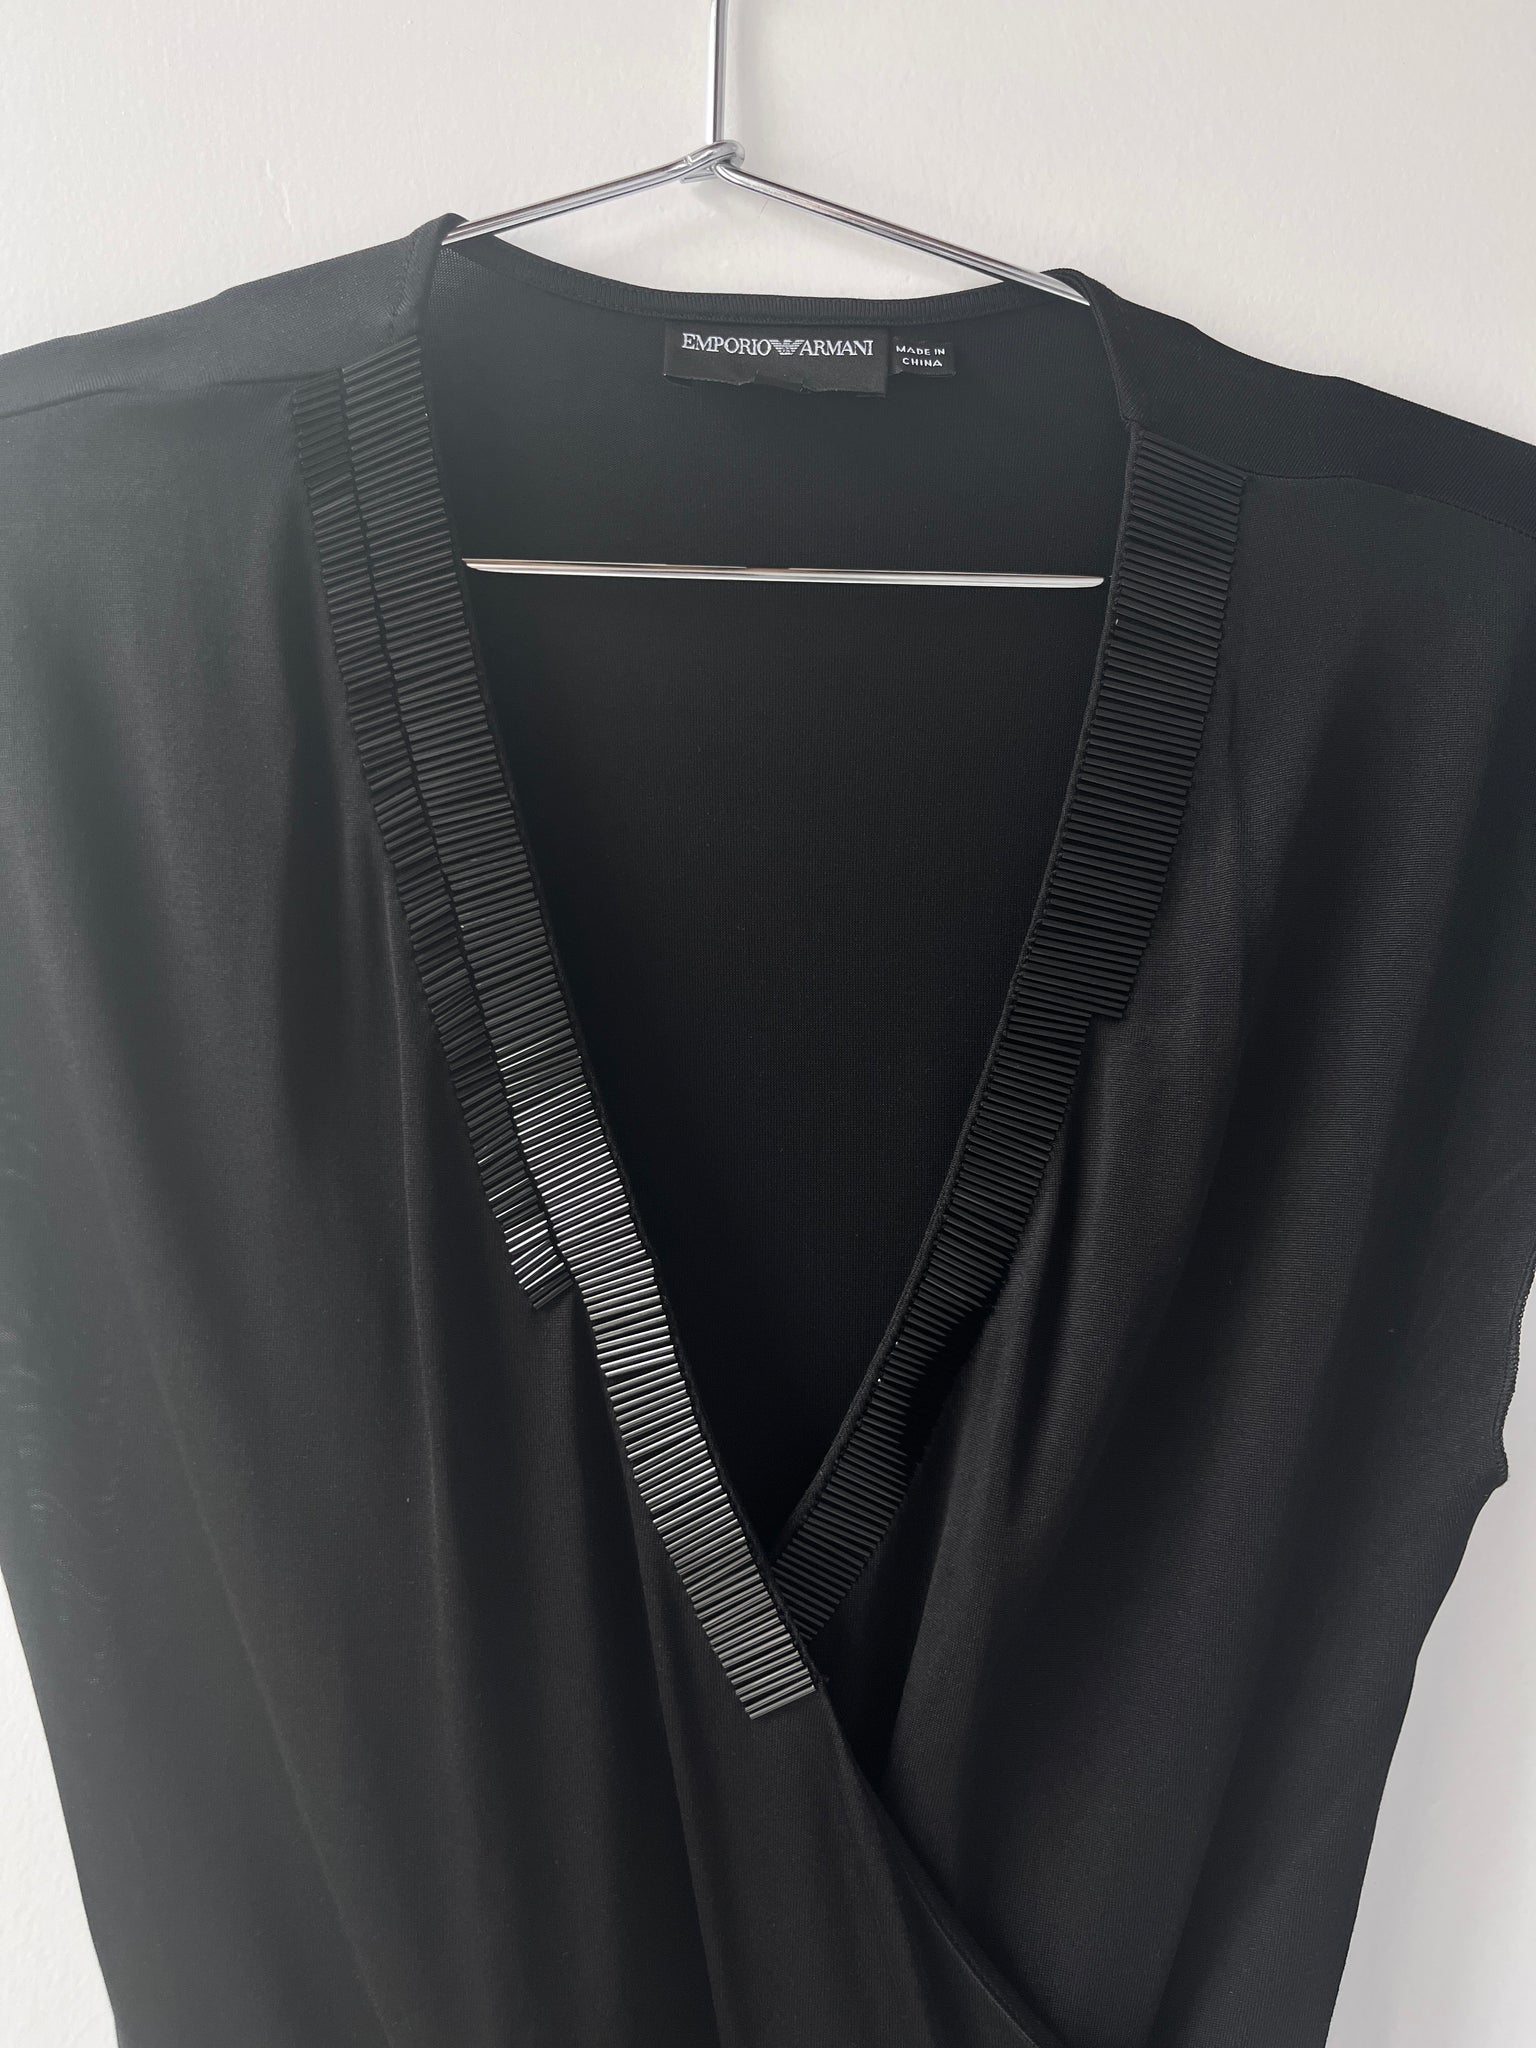 Giorgio Armani black jersey dress with beading